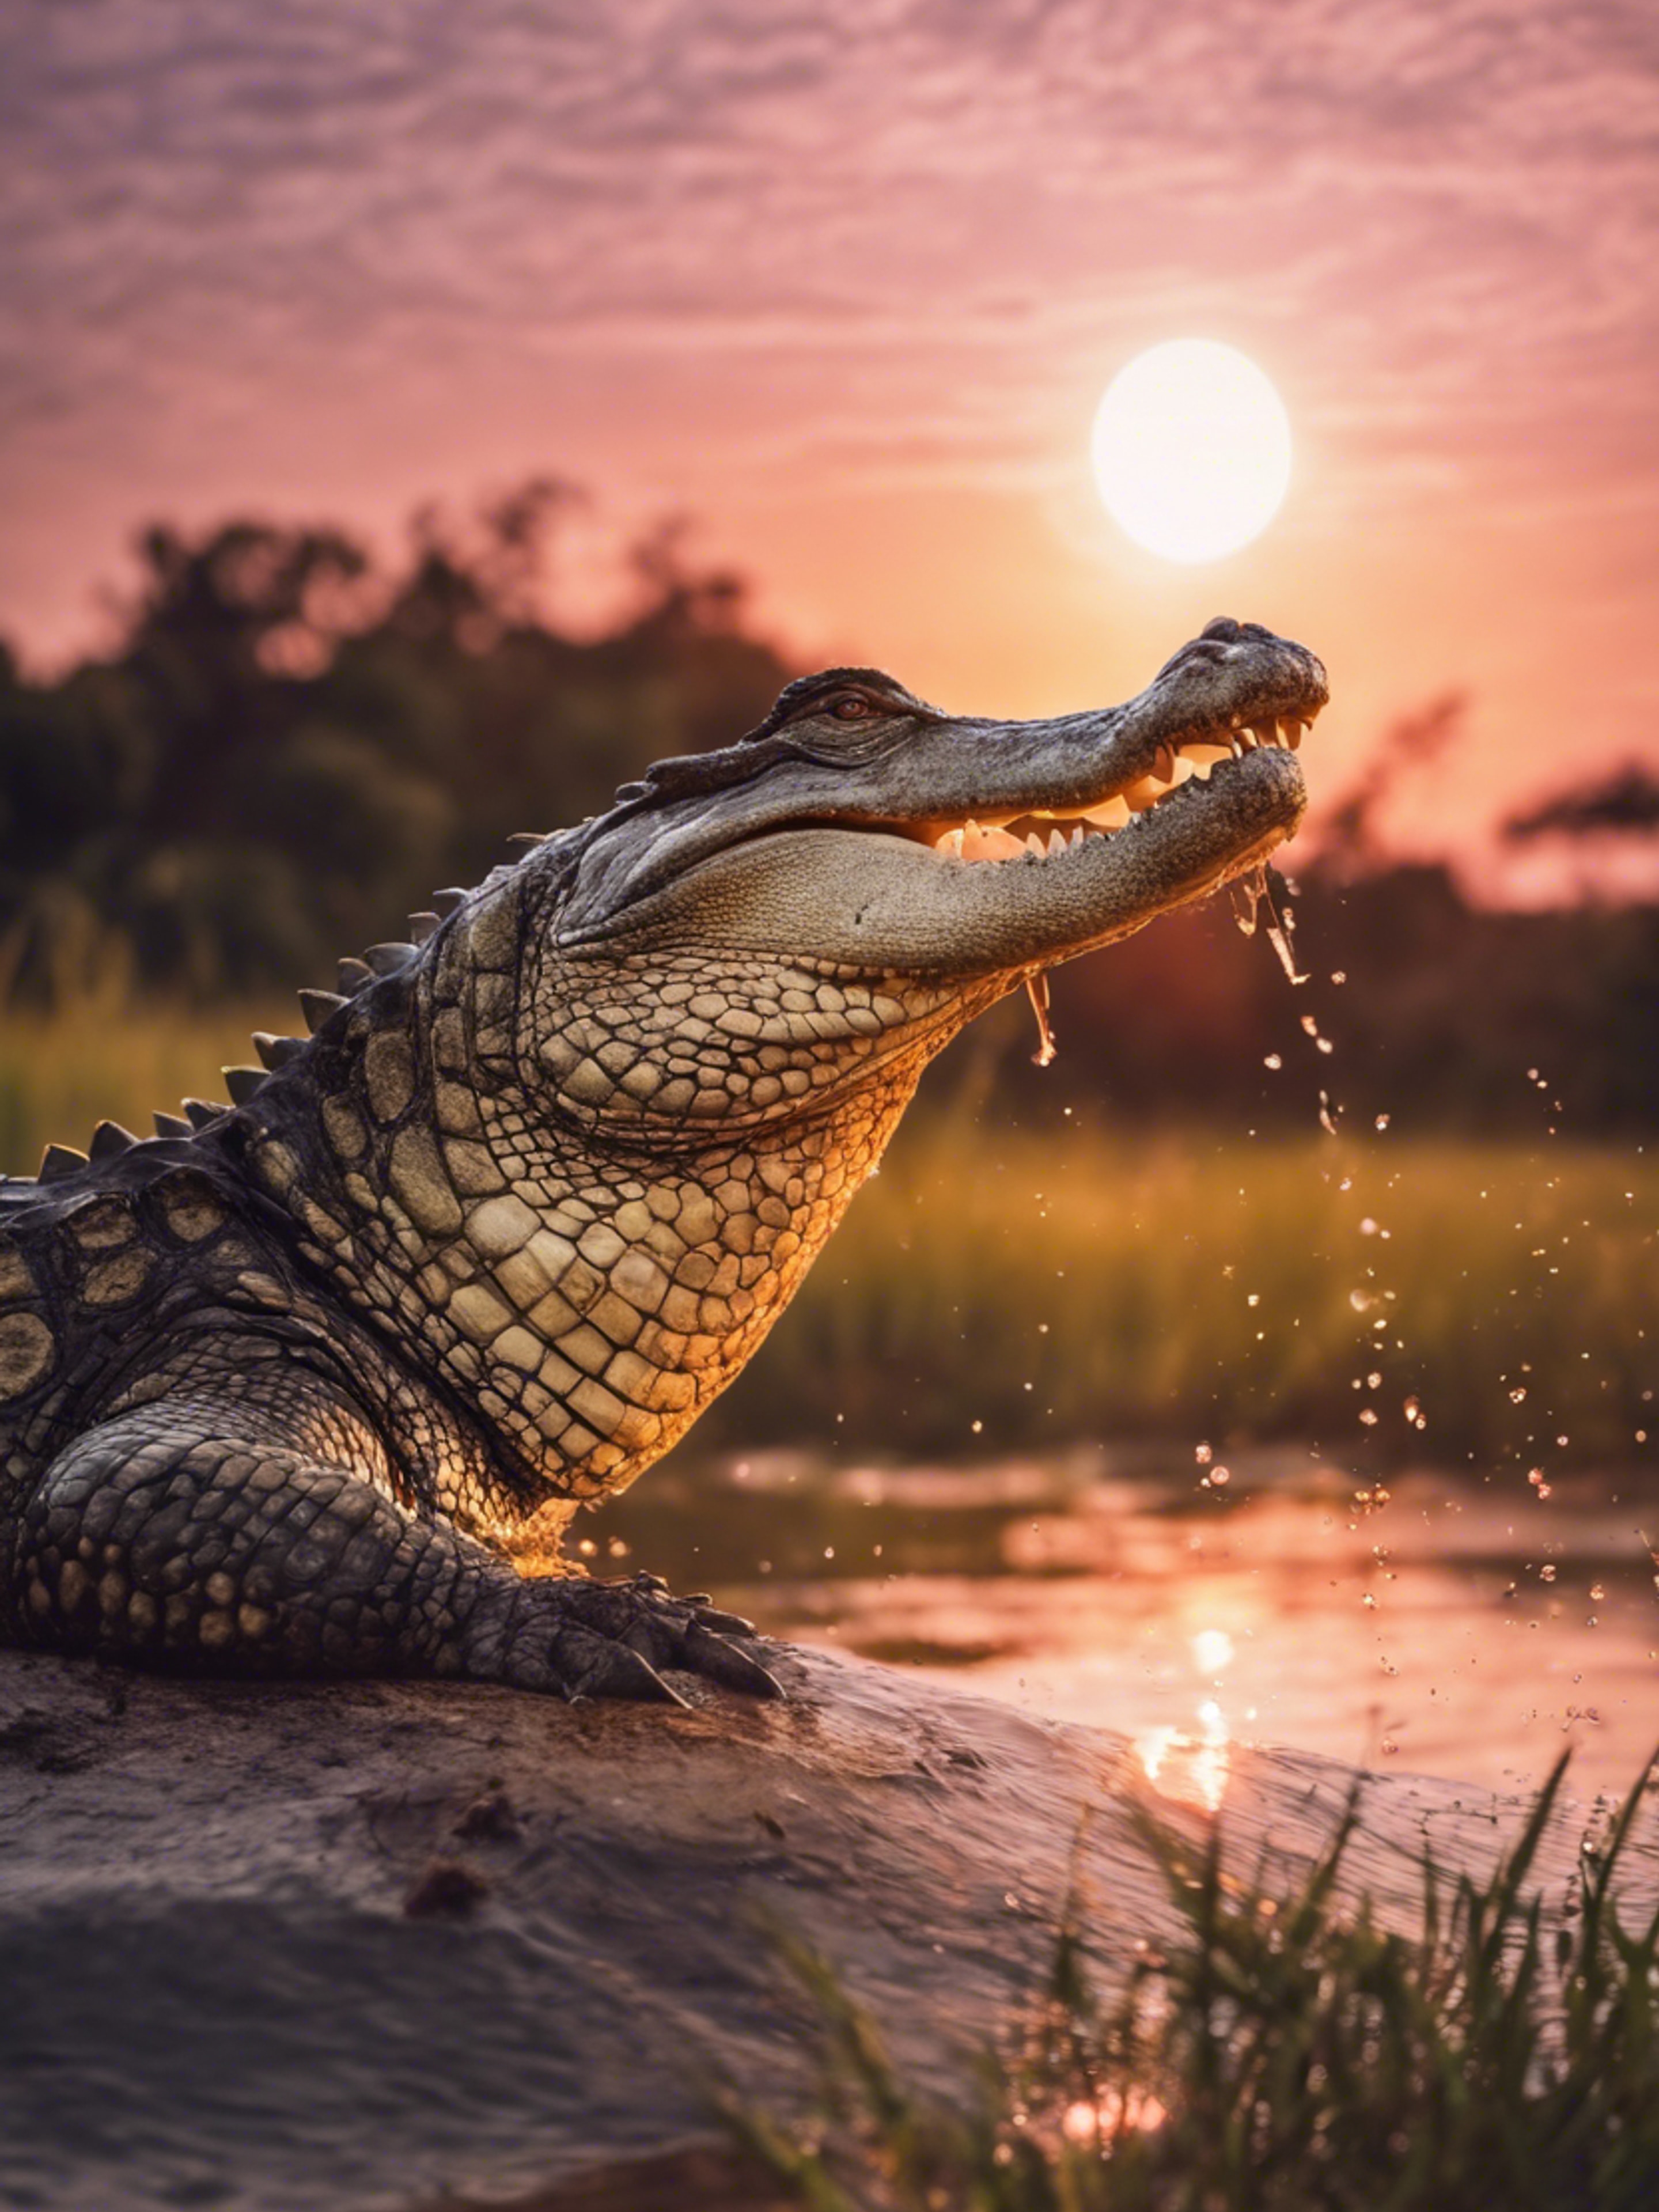 A beautiful sunrise with a crocodile breaking the surface under a rosy sky. Tapéta[8e947b6adb0246b9980f]